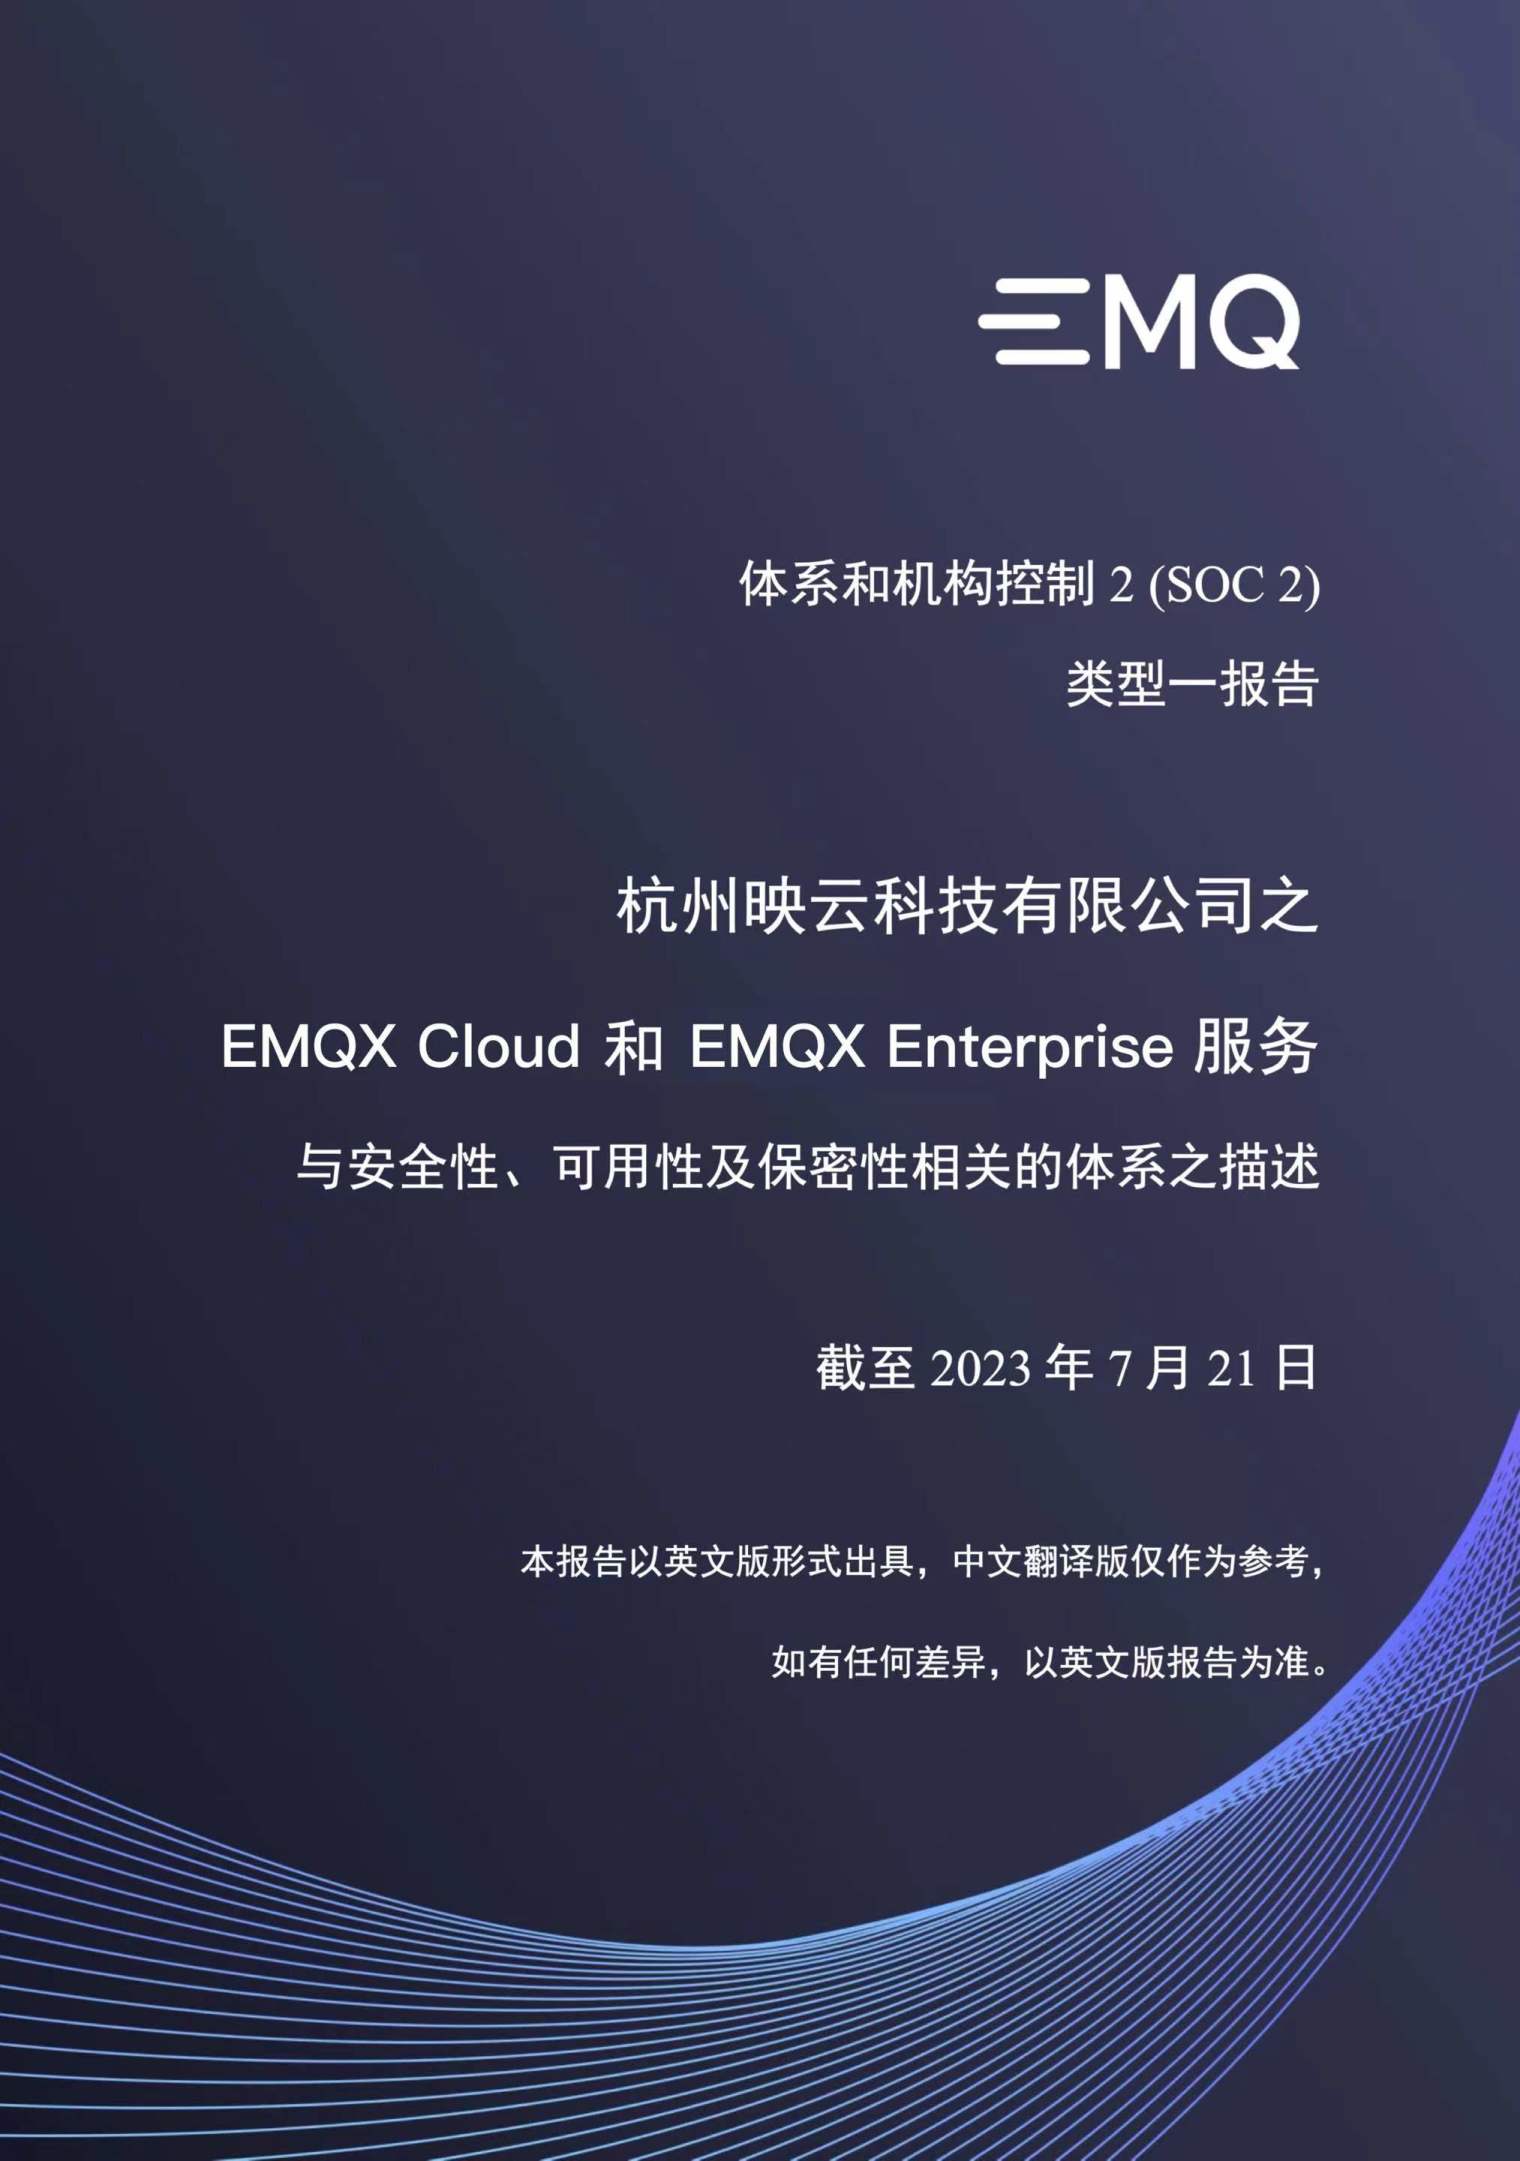 EMQ 成功通过 SOC 2 Type I 认证